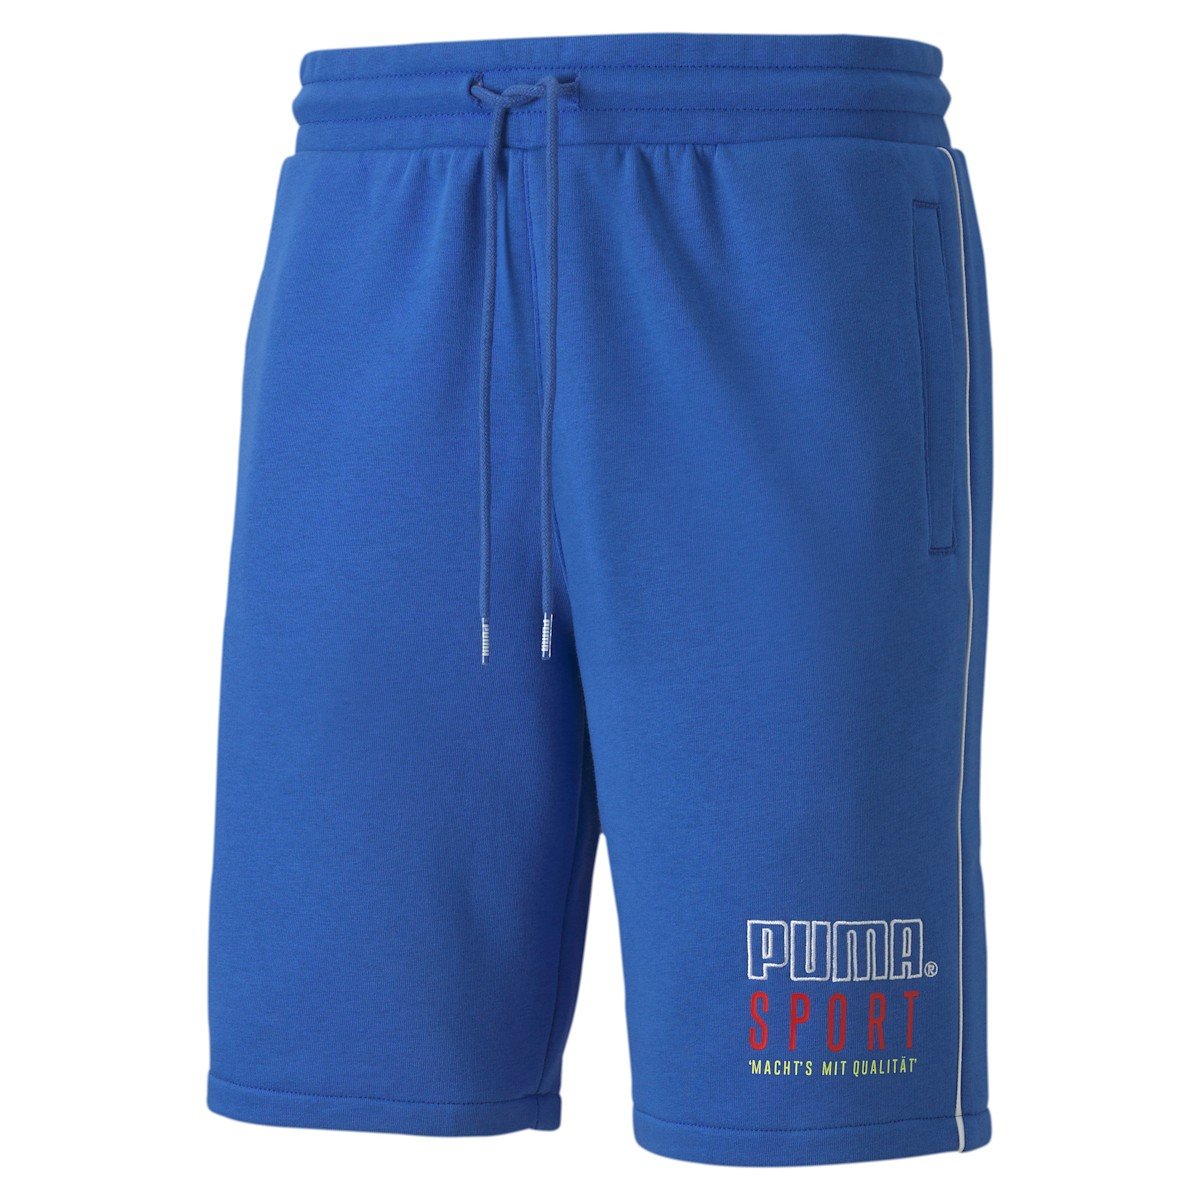 Puma Men's Puma Sport Shorts Dazzling Blue